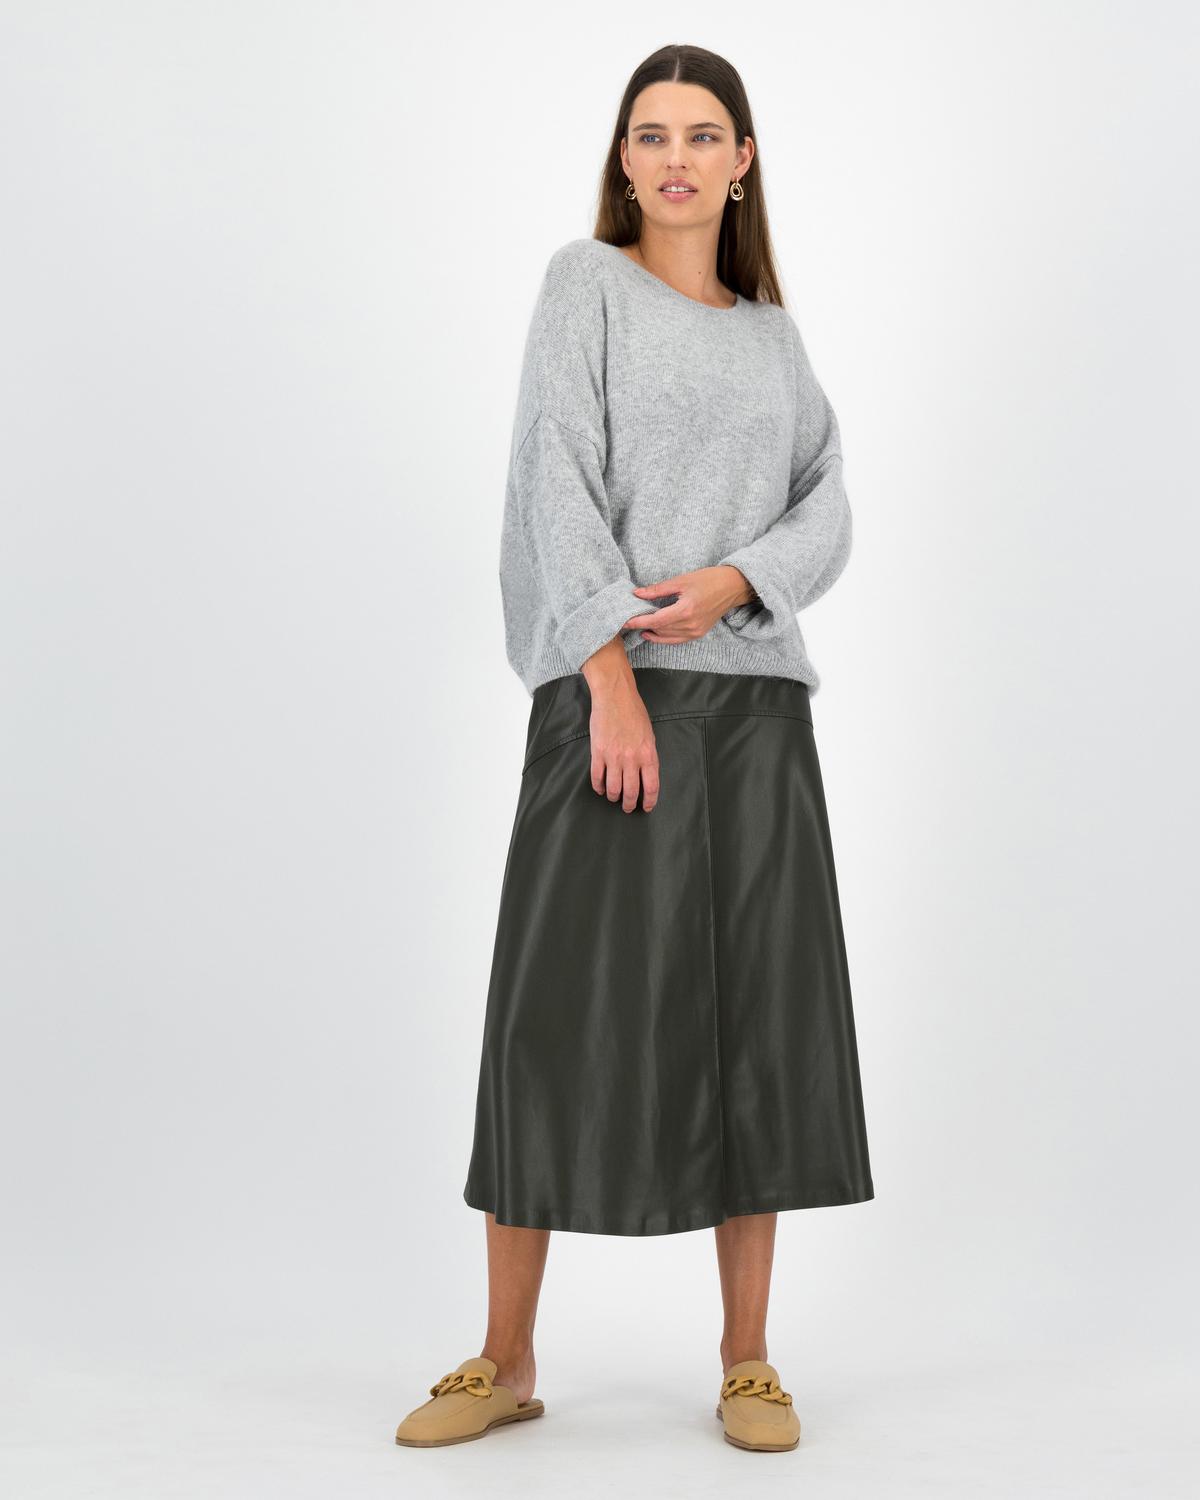 Coen Faux Leather Skirt -  Dark Olive